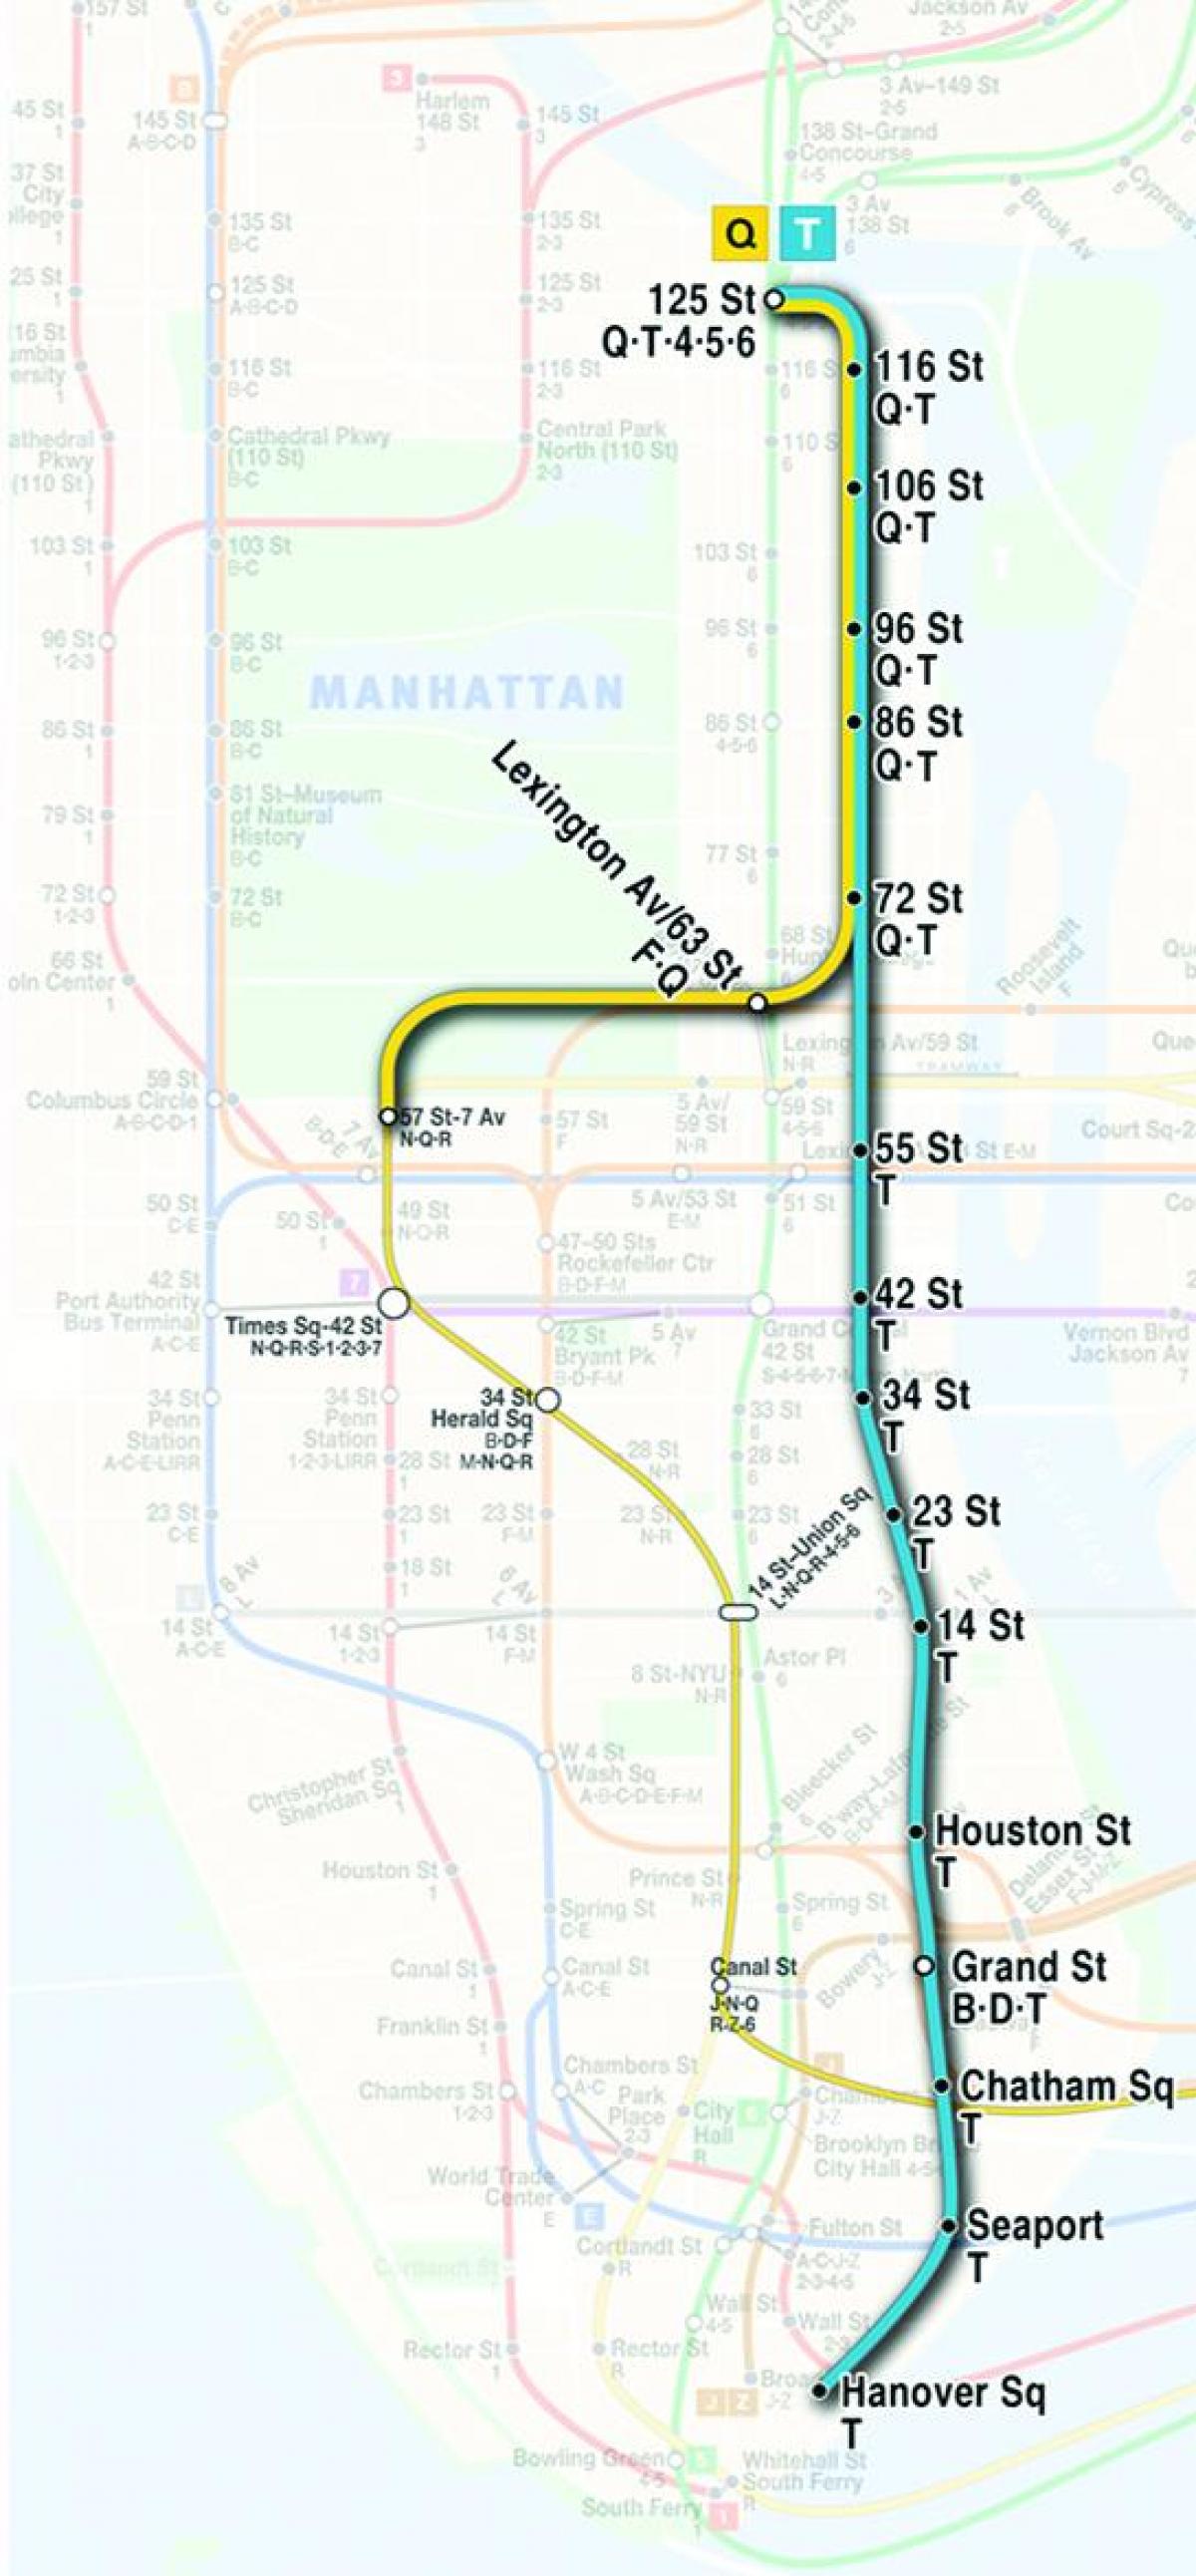 karta metroa second avenue